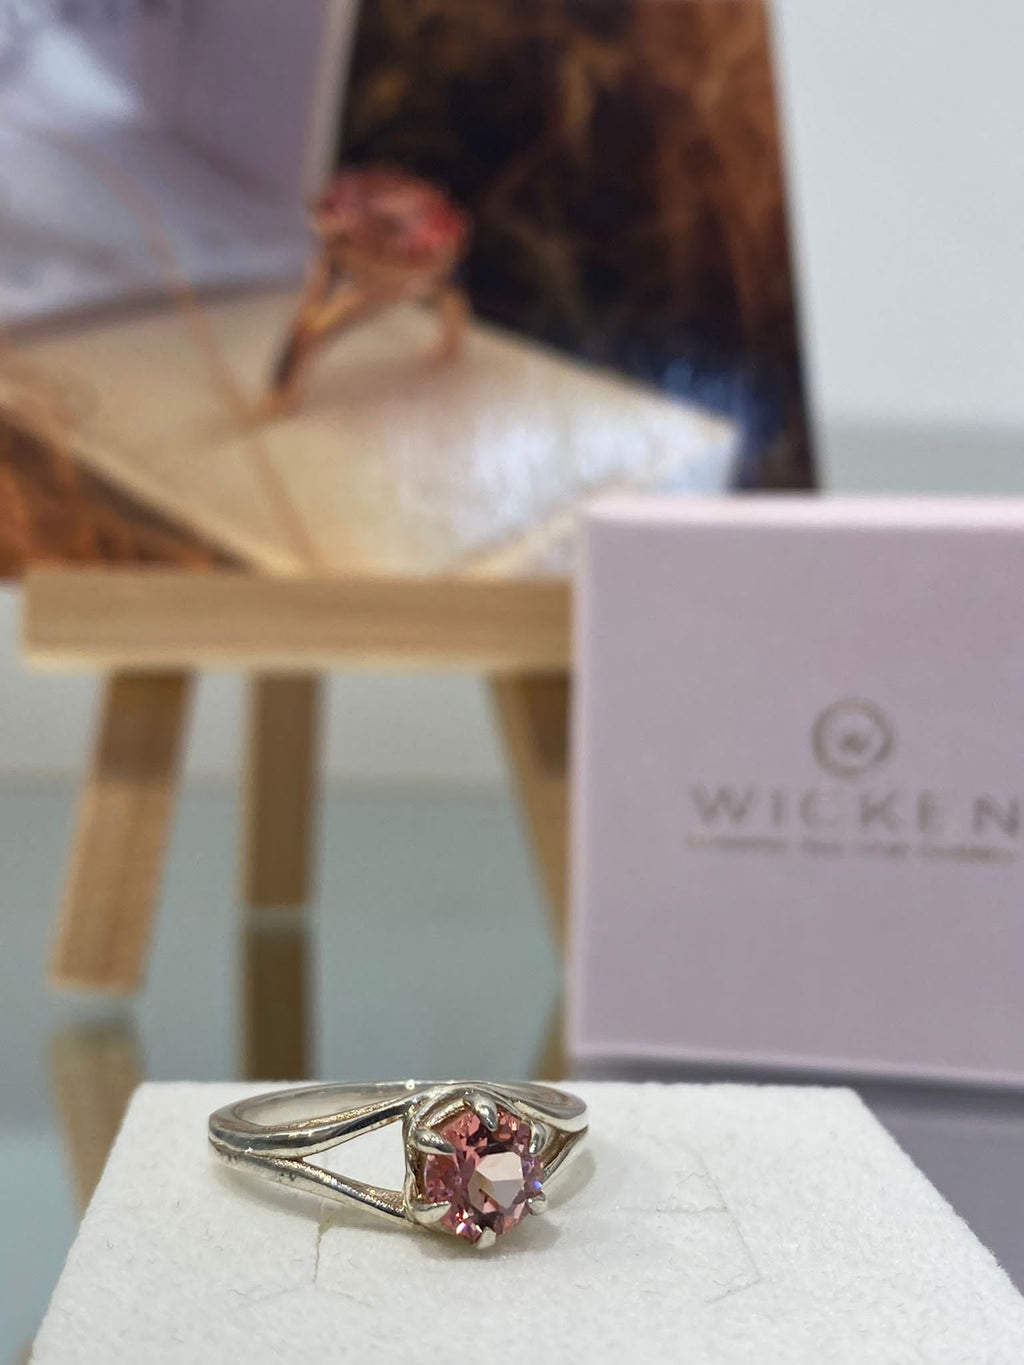 Wicken: Baby Love Nest Ring - Silver